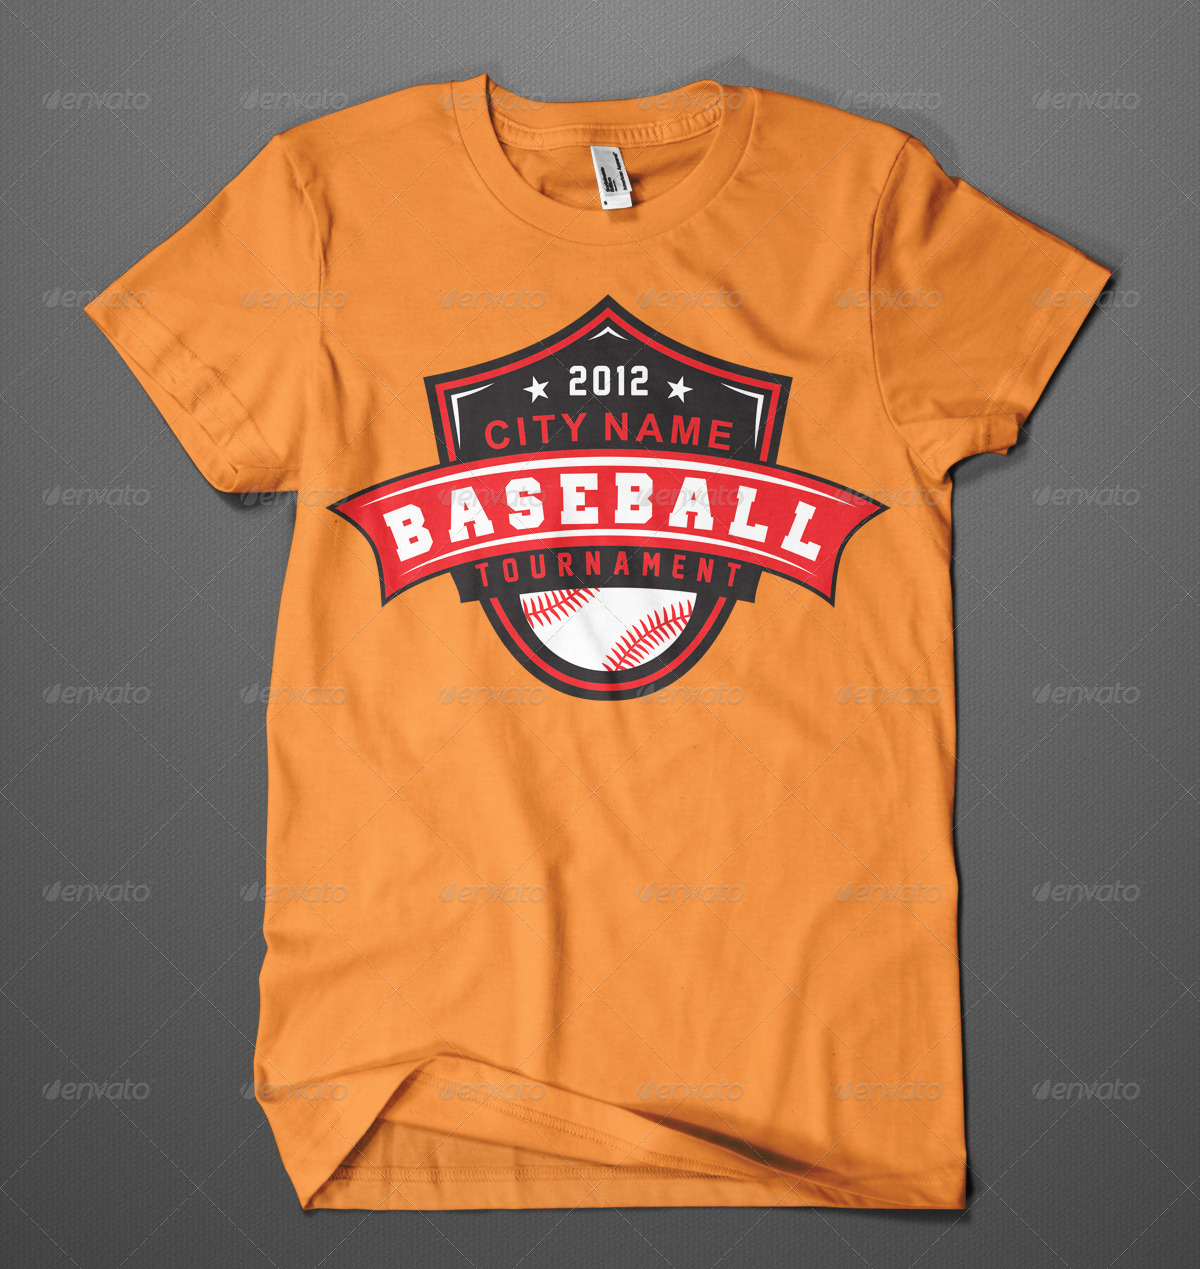 Baseball T-Shirt by gangzar | GraphicRiver